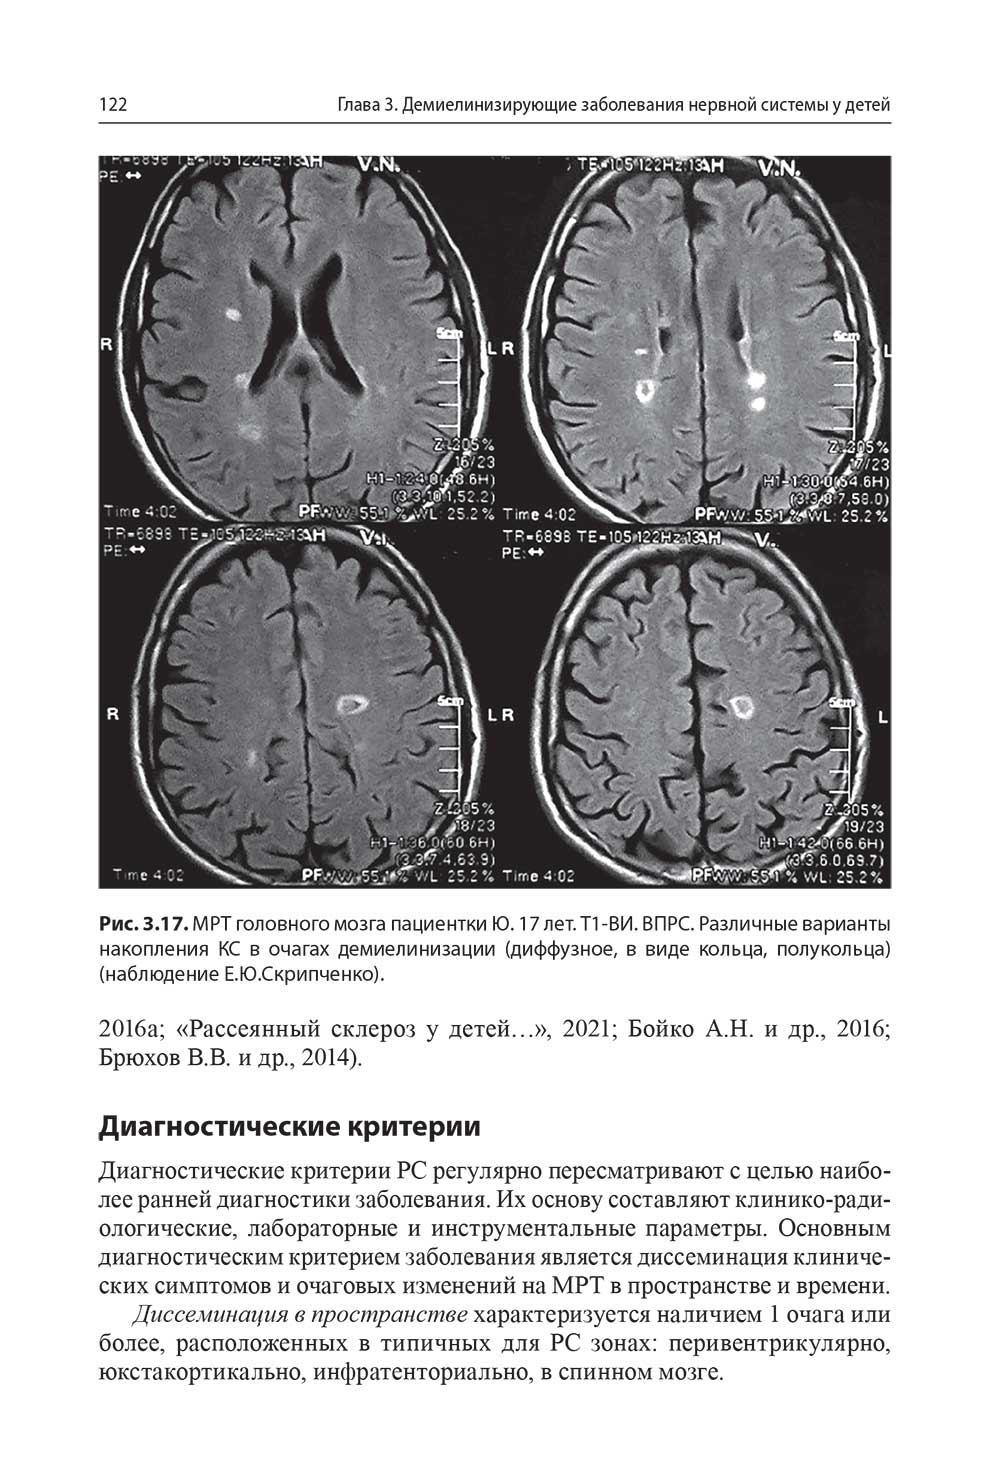 MPT головного мозга пациентки Ю. 17 лет.